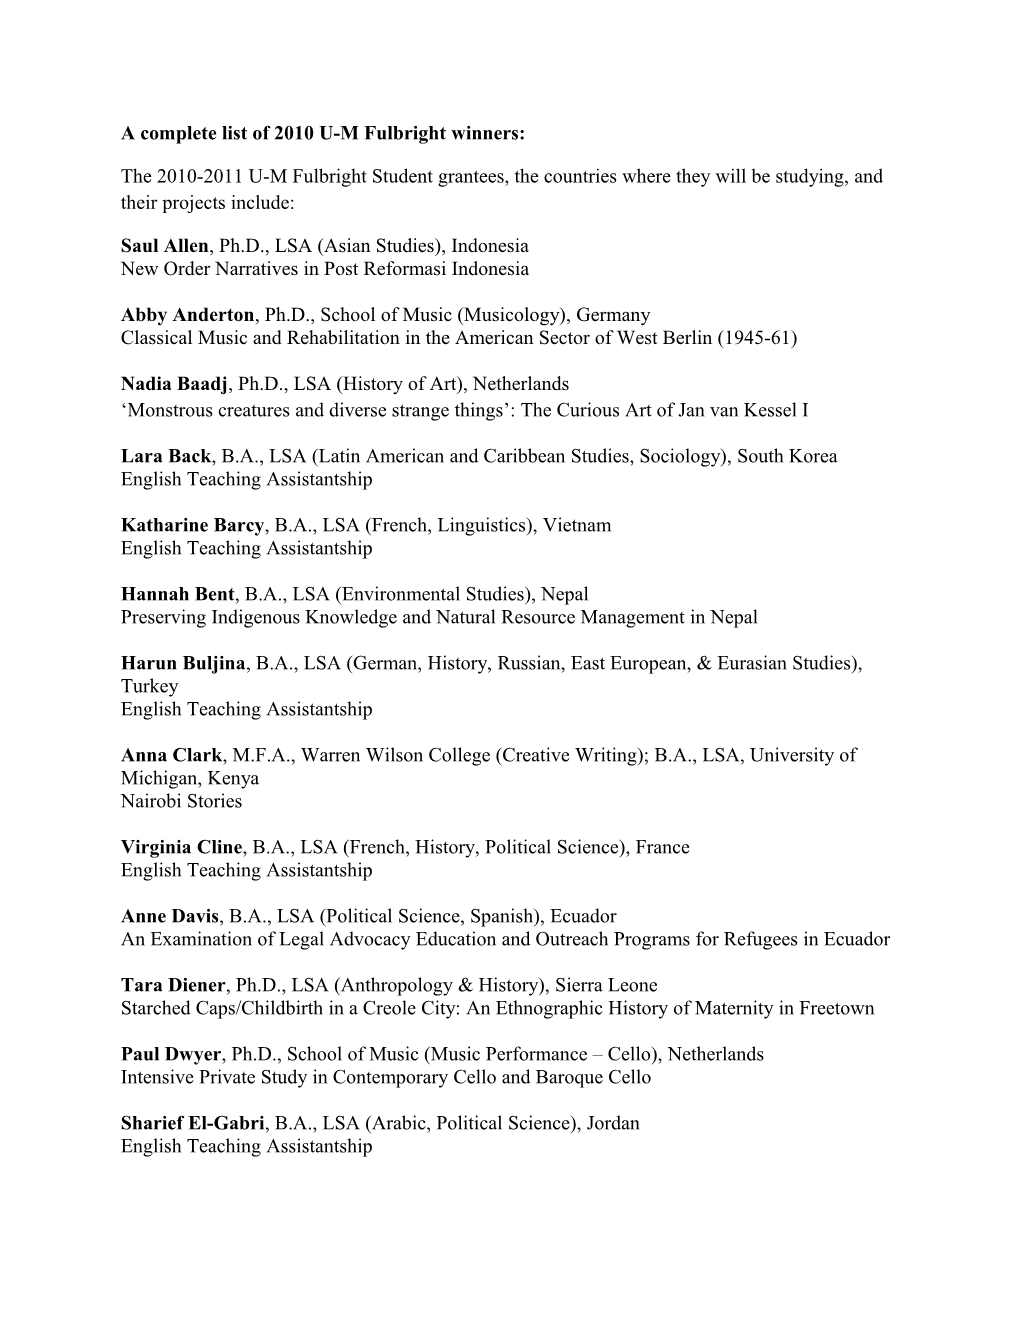 A Complete List of 2010 U-M Fulbright Winners